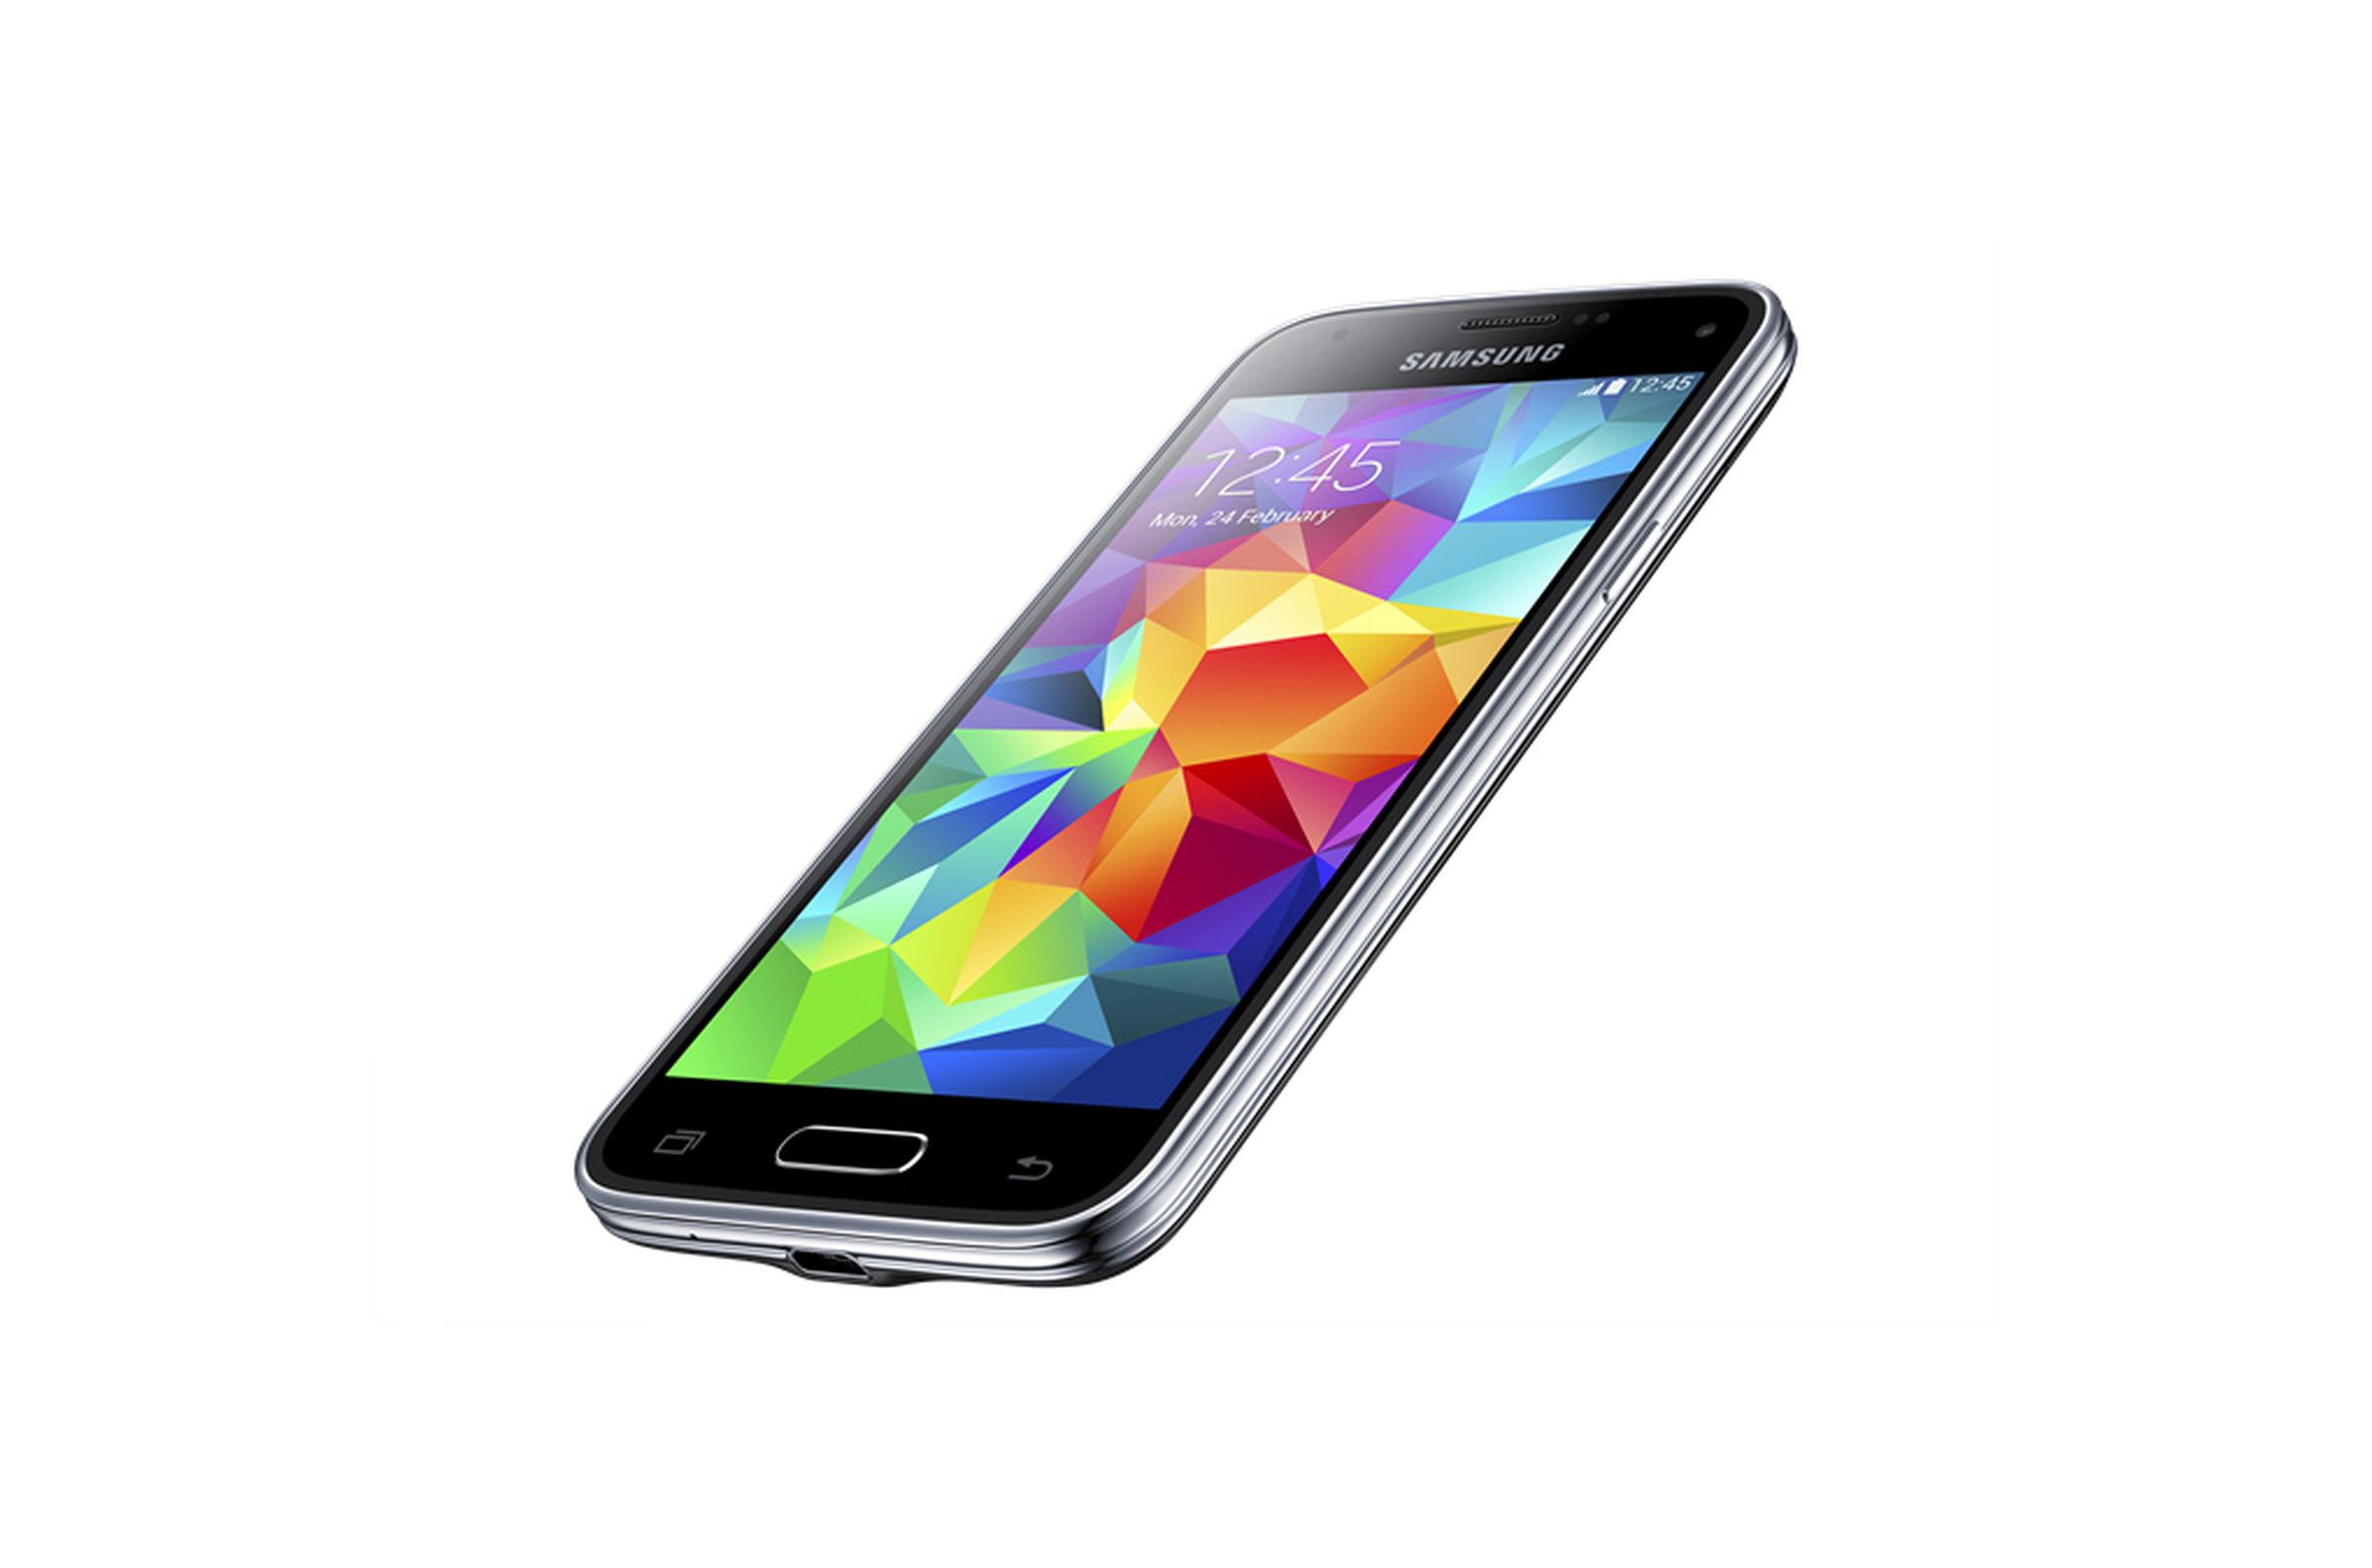 Samsung Galaxy S5 mini press photos